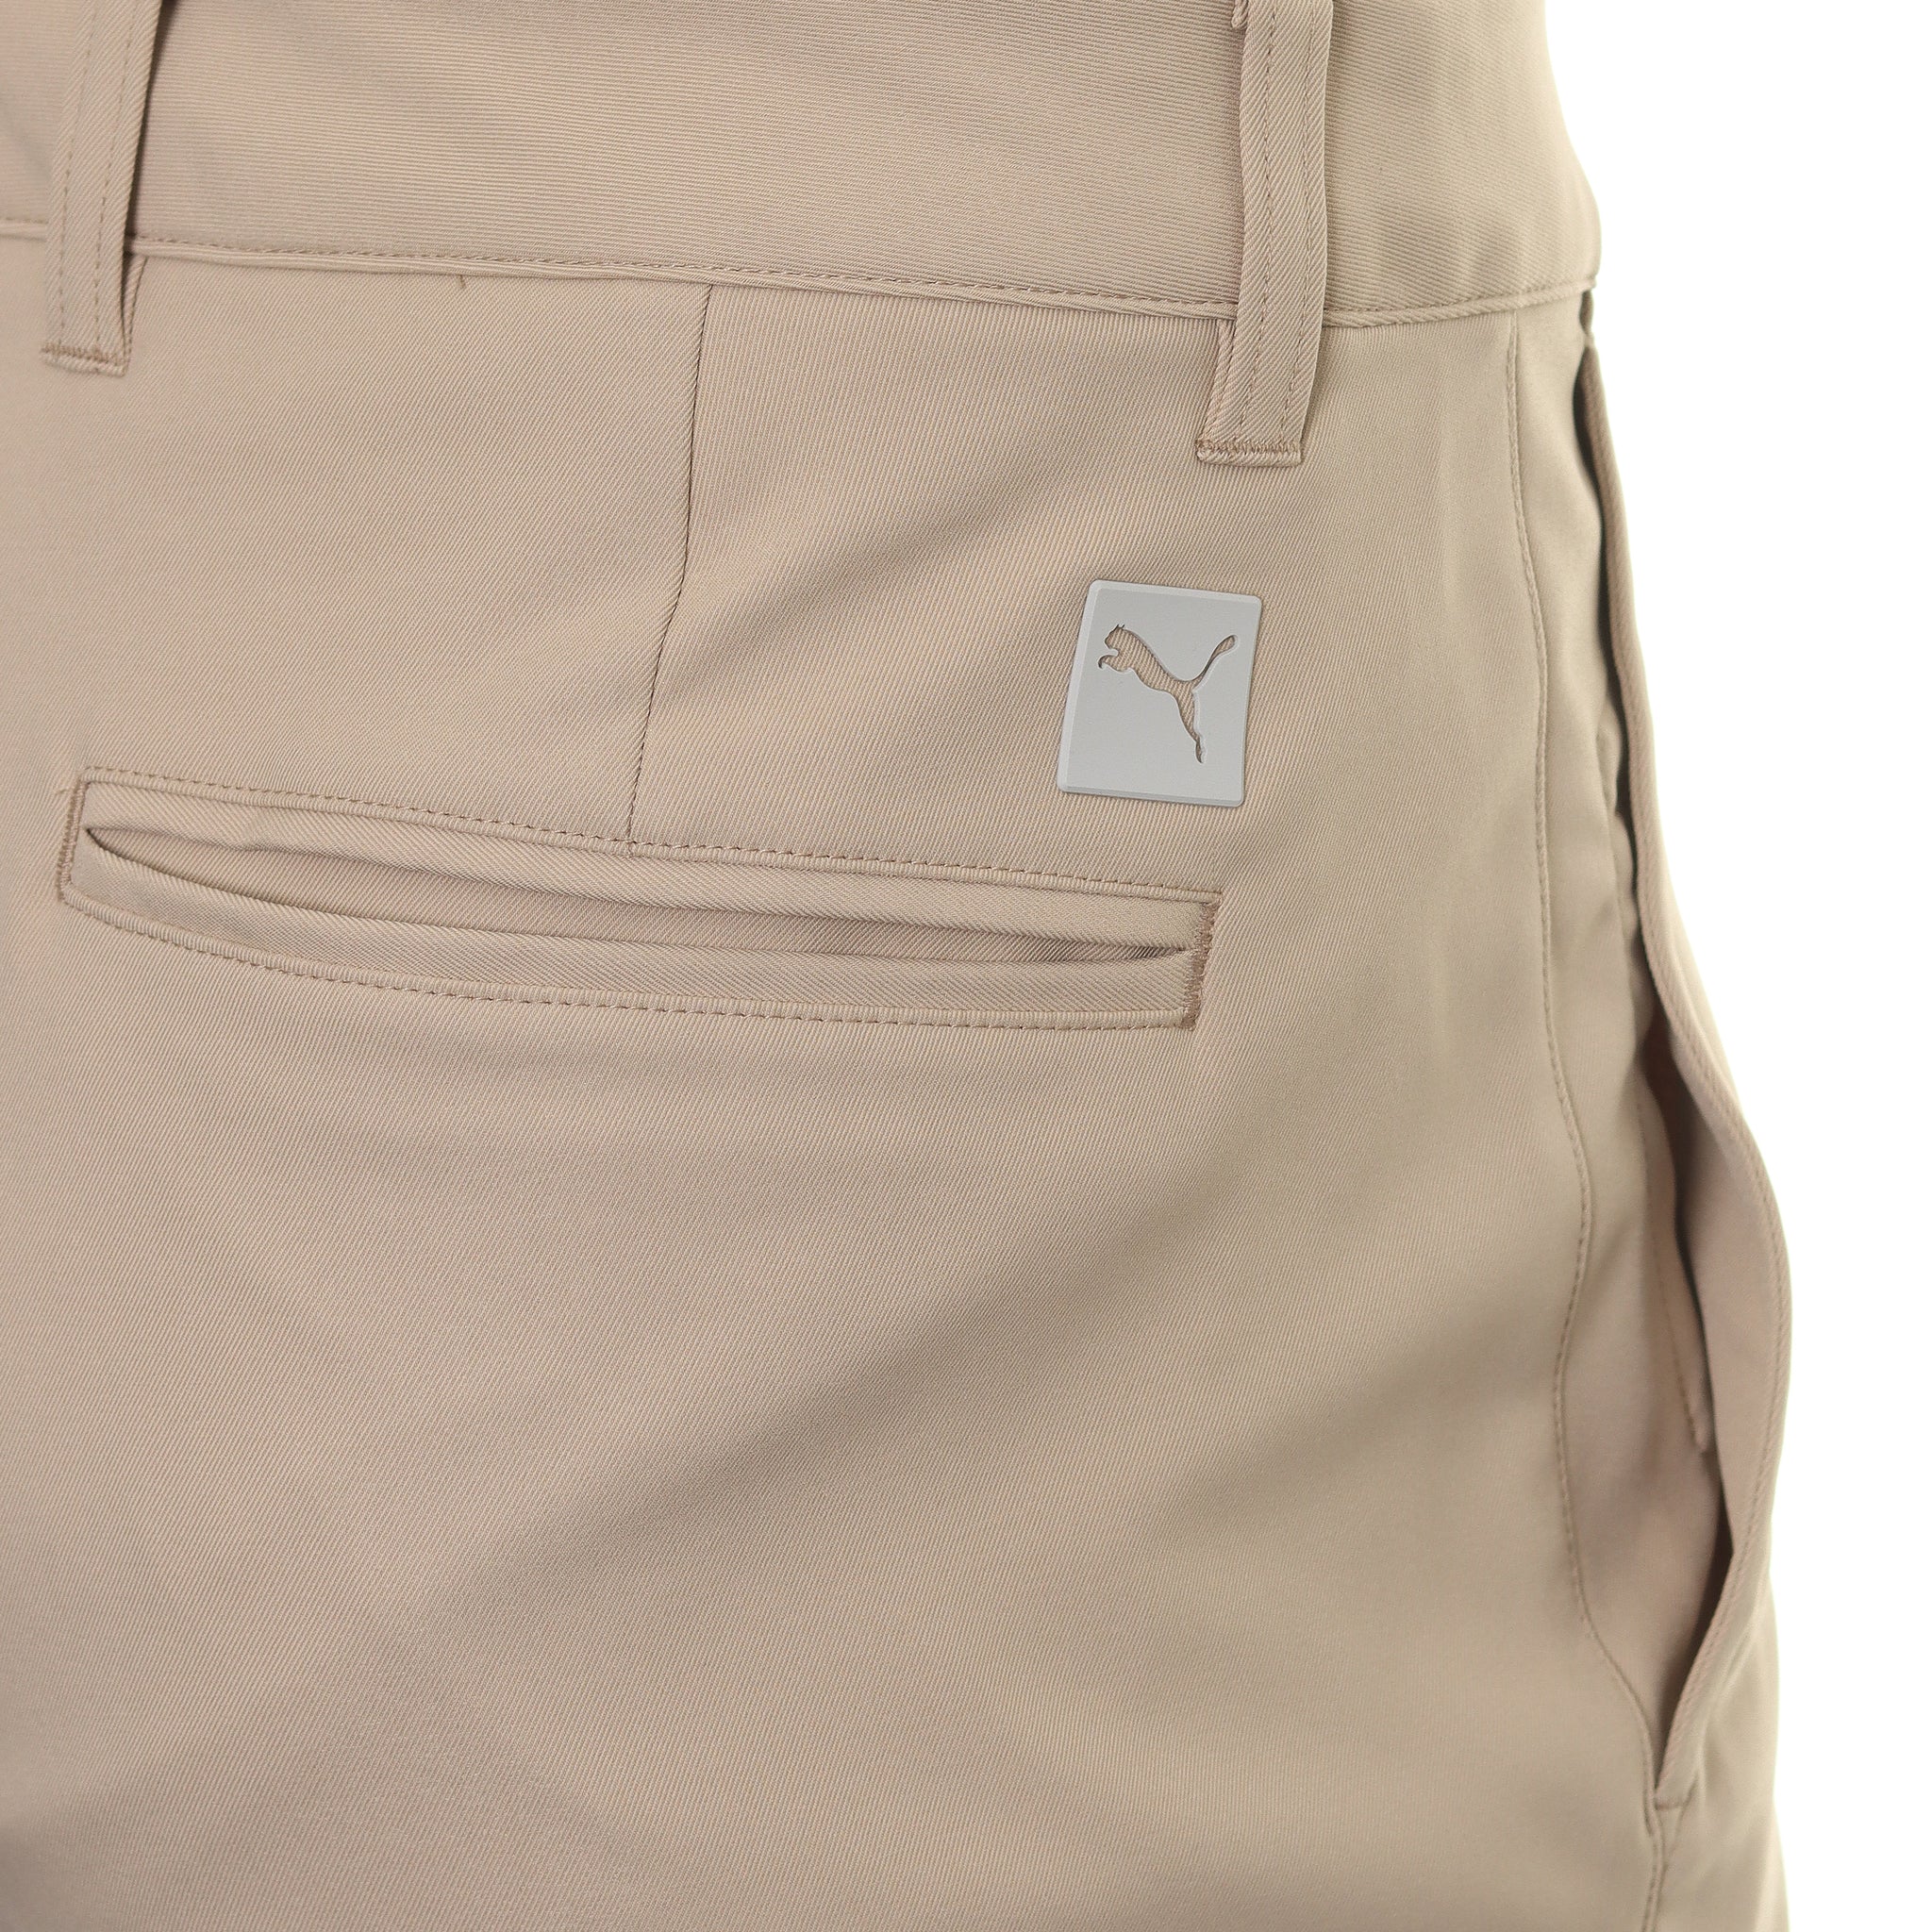 NEW Men's Puma 2021 Jackpot 5 Pocket Golf Pants - Choose Size & Color! |  eBay